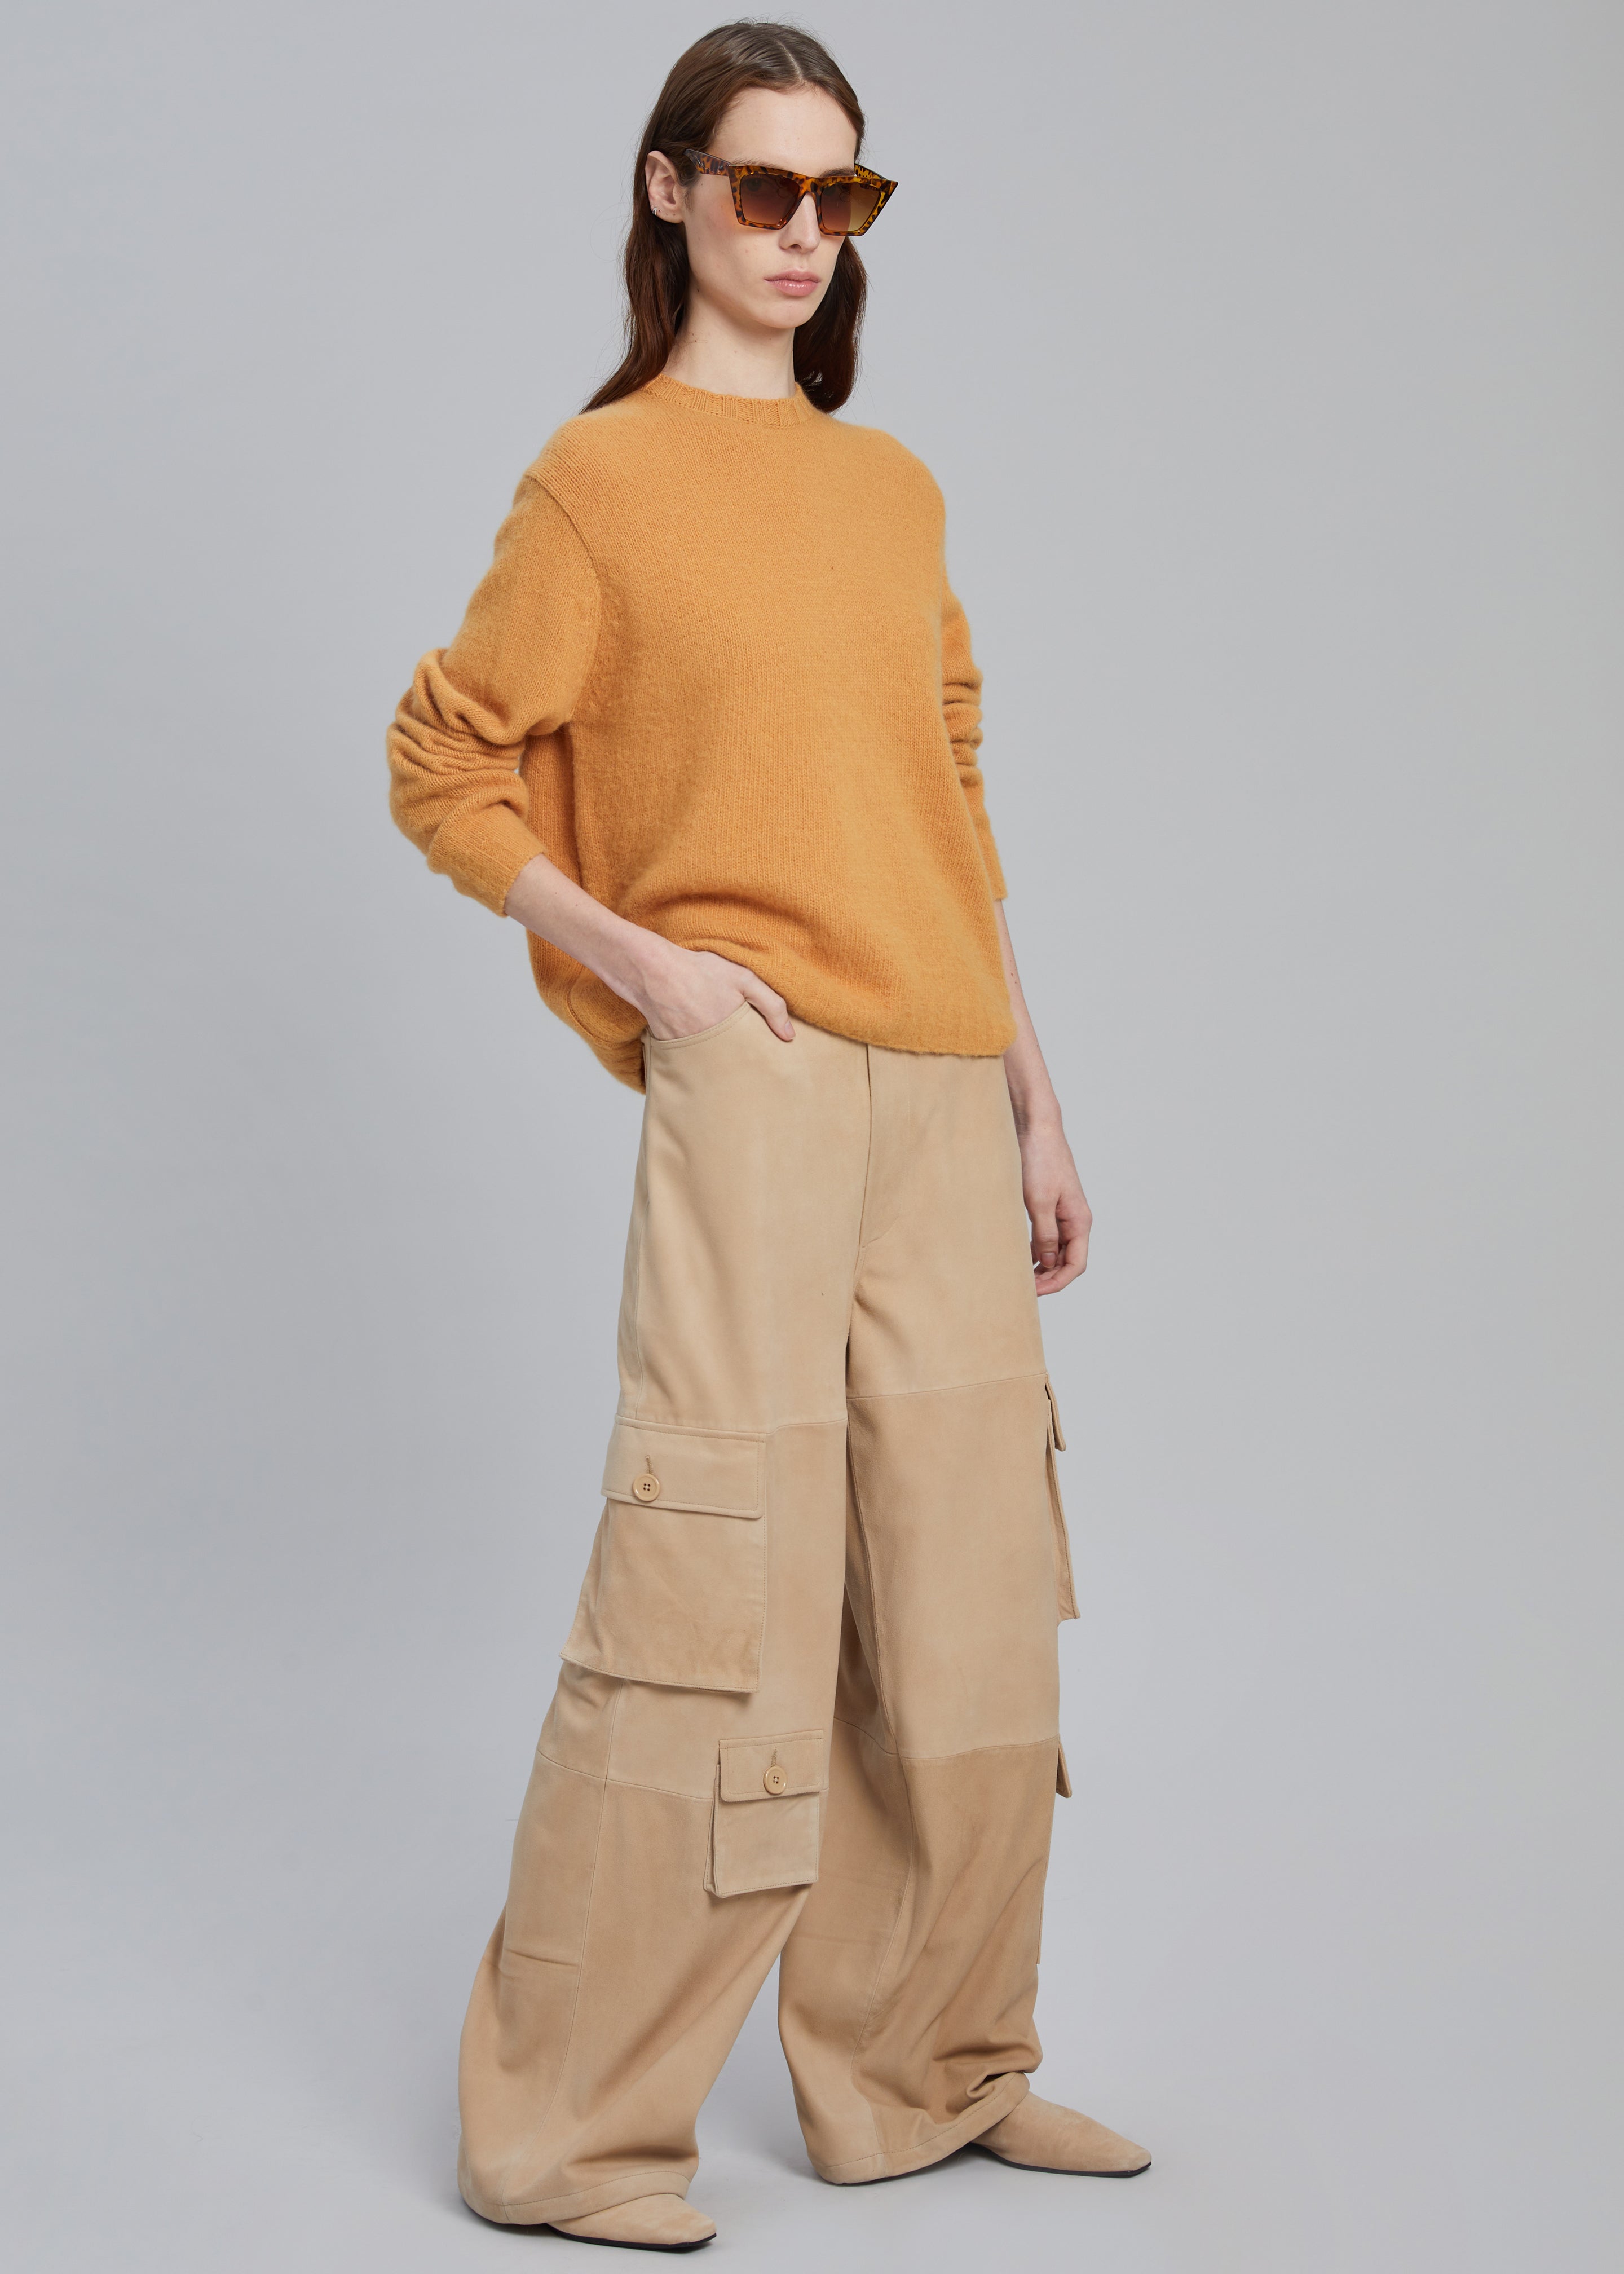 Lorain Sweater - Orange - 2